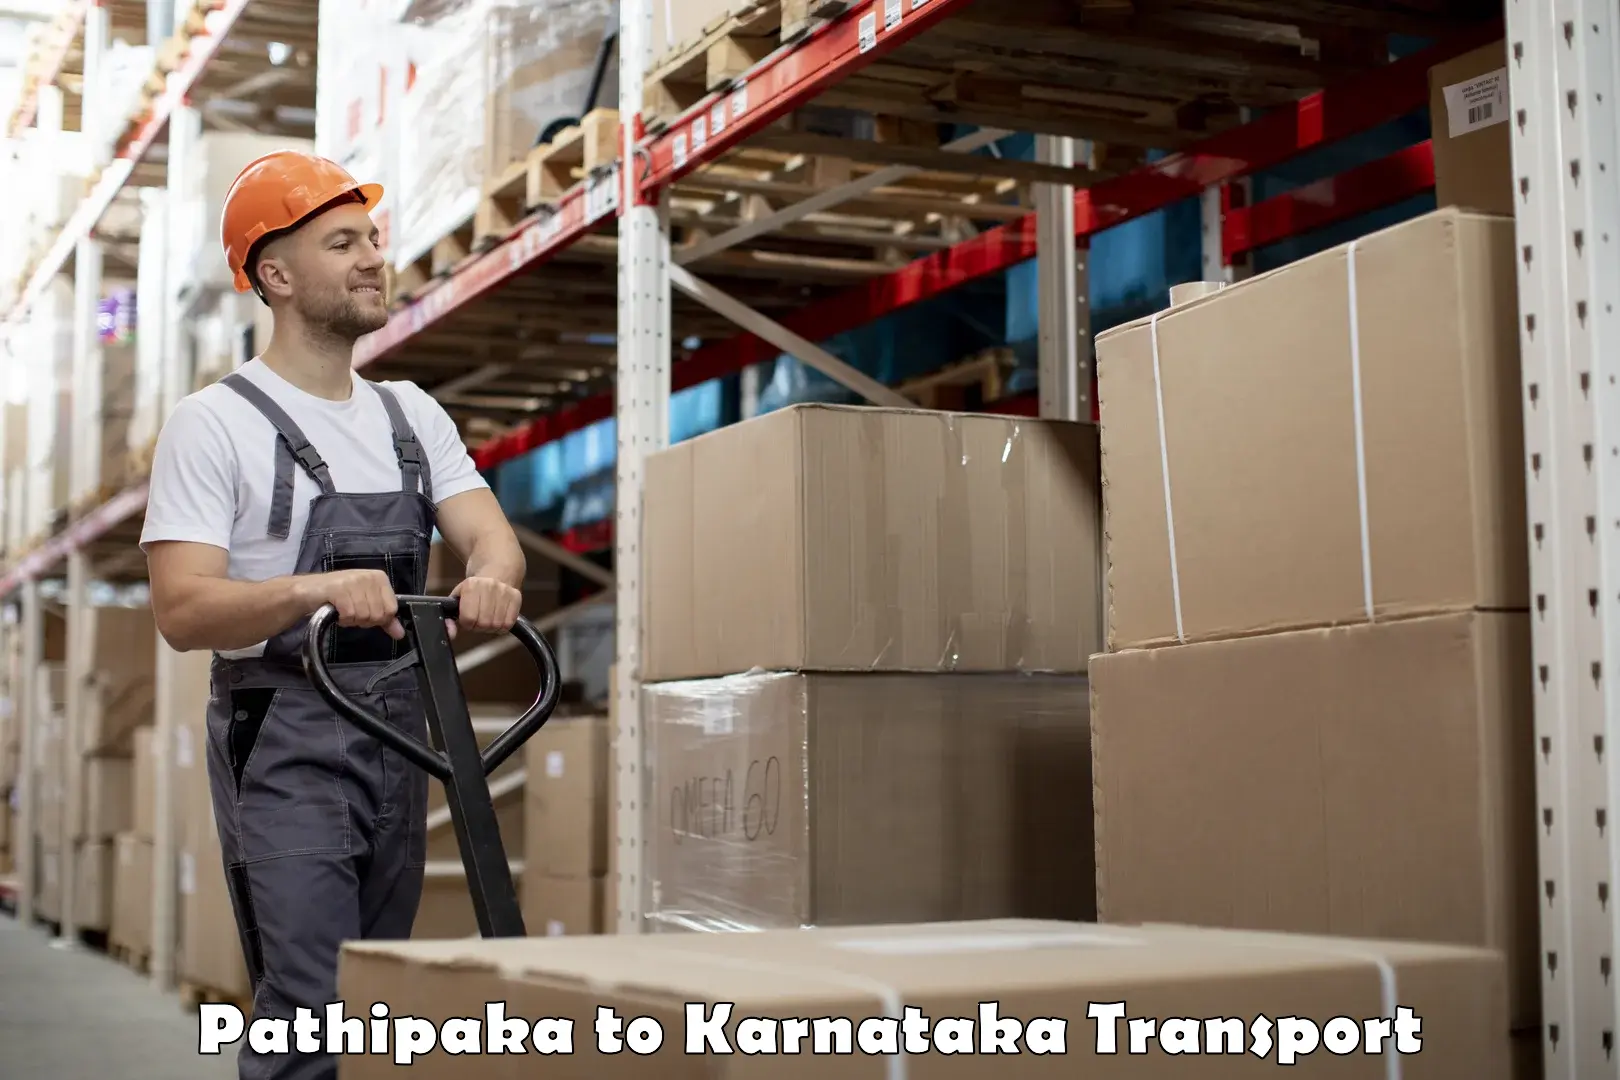 Delivery service Pathipaka to Karnataka